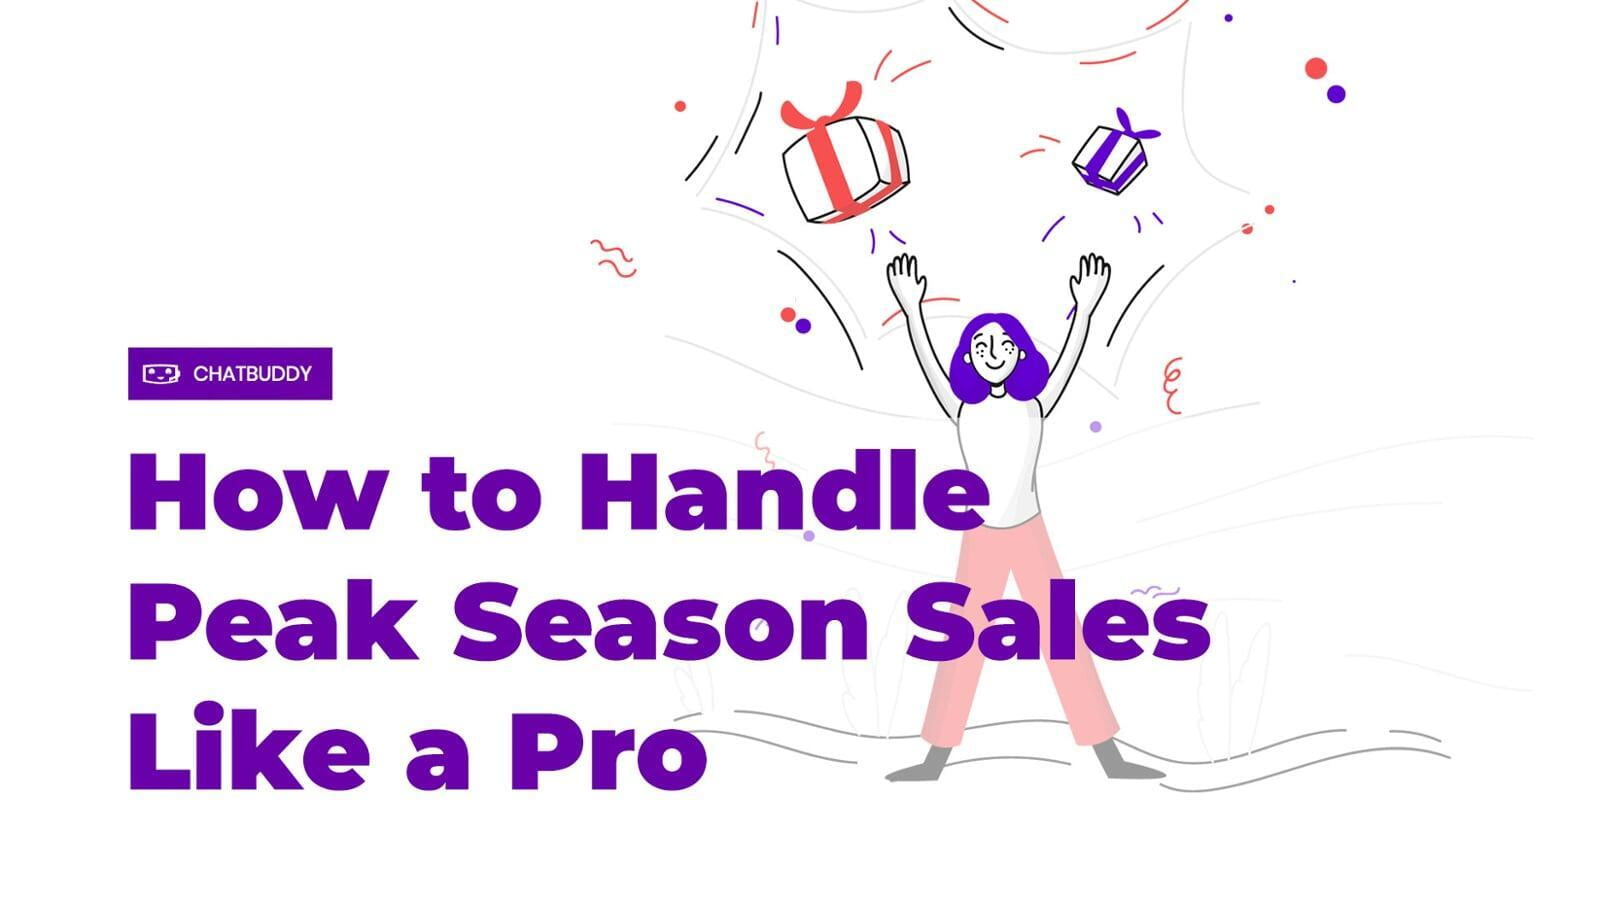 How to Handle Peak Season Sales Like a Pro